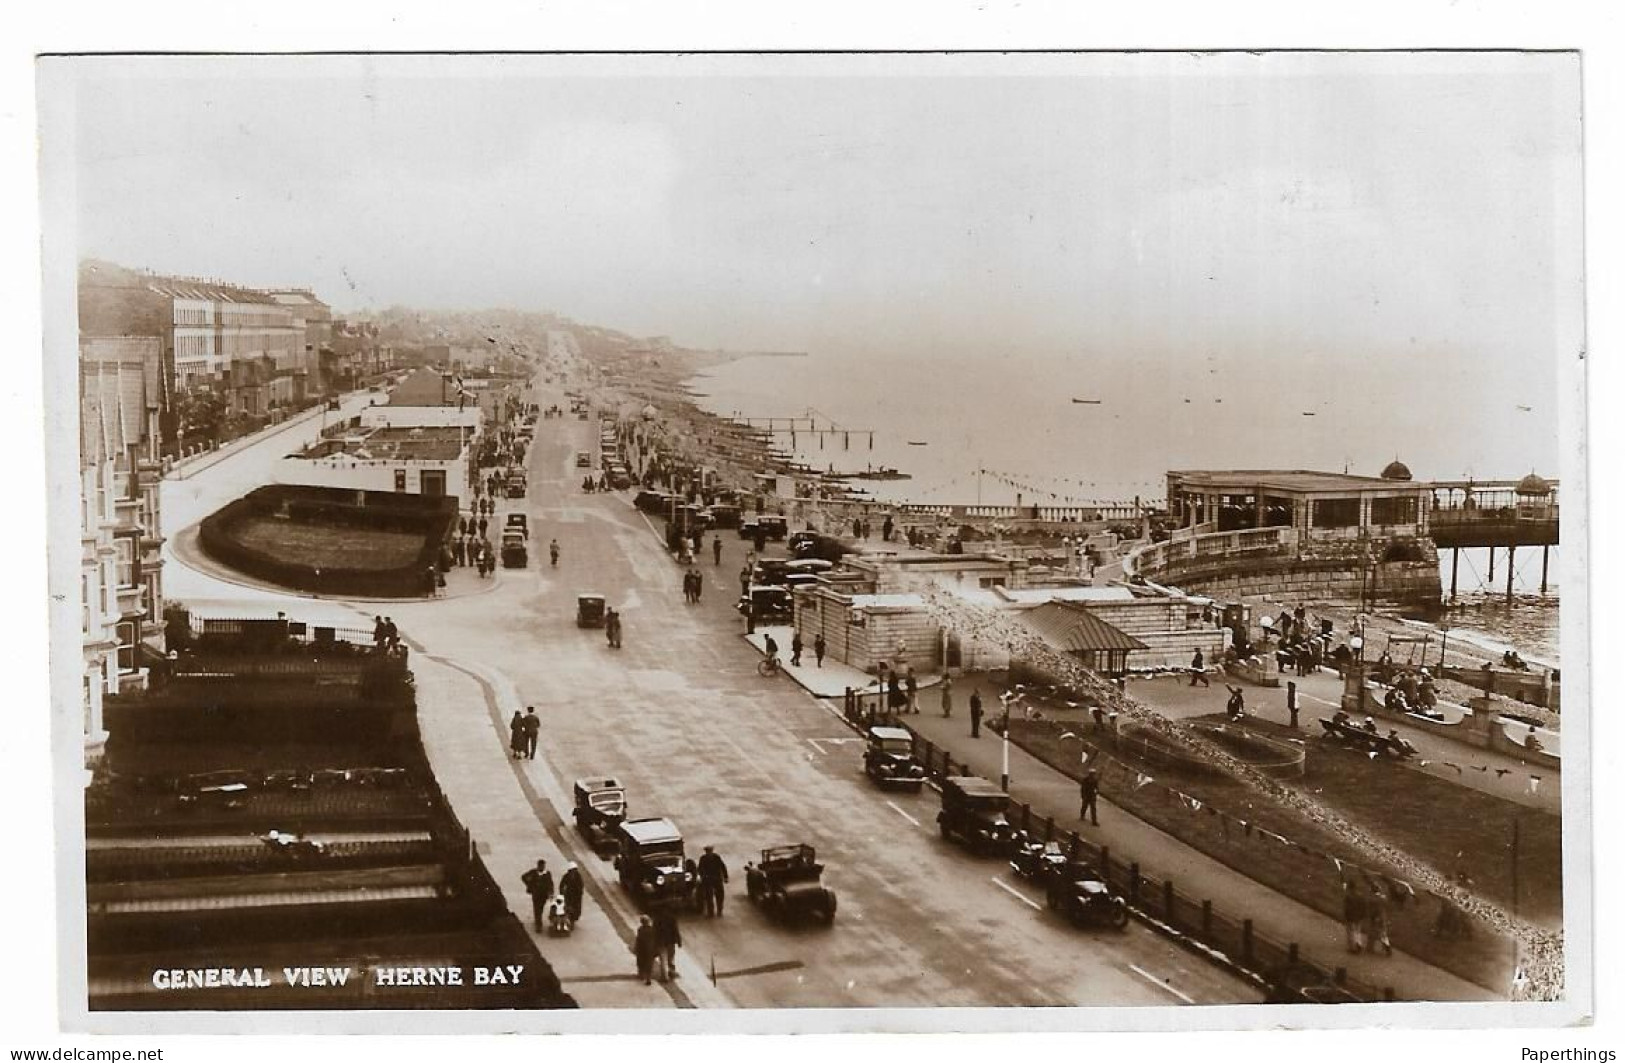 Real Photo Postcard, Kent, Canterbury, Herne Bay, General View, Cars, Road, Street, People. 1937. - Canterbury